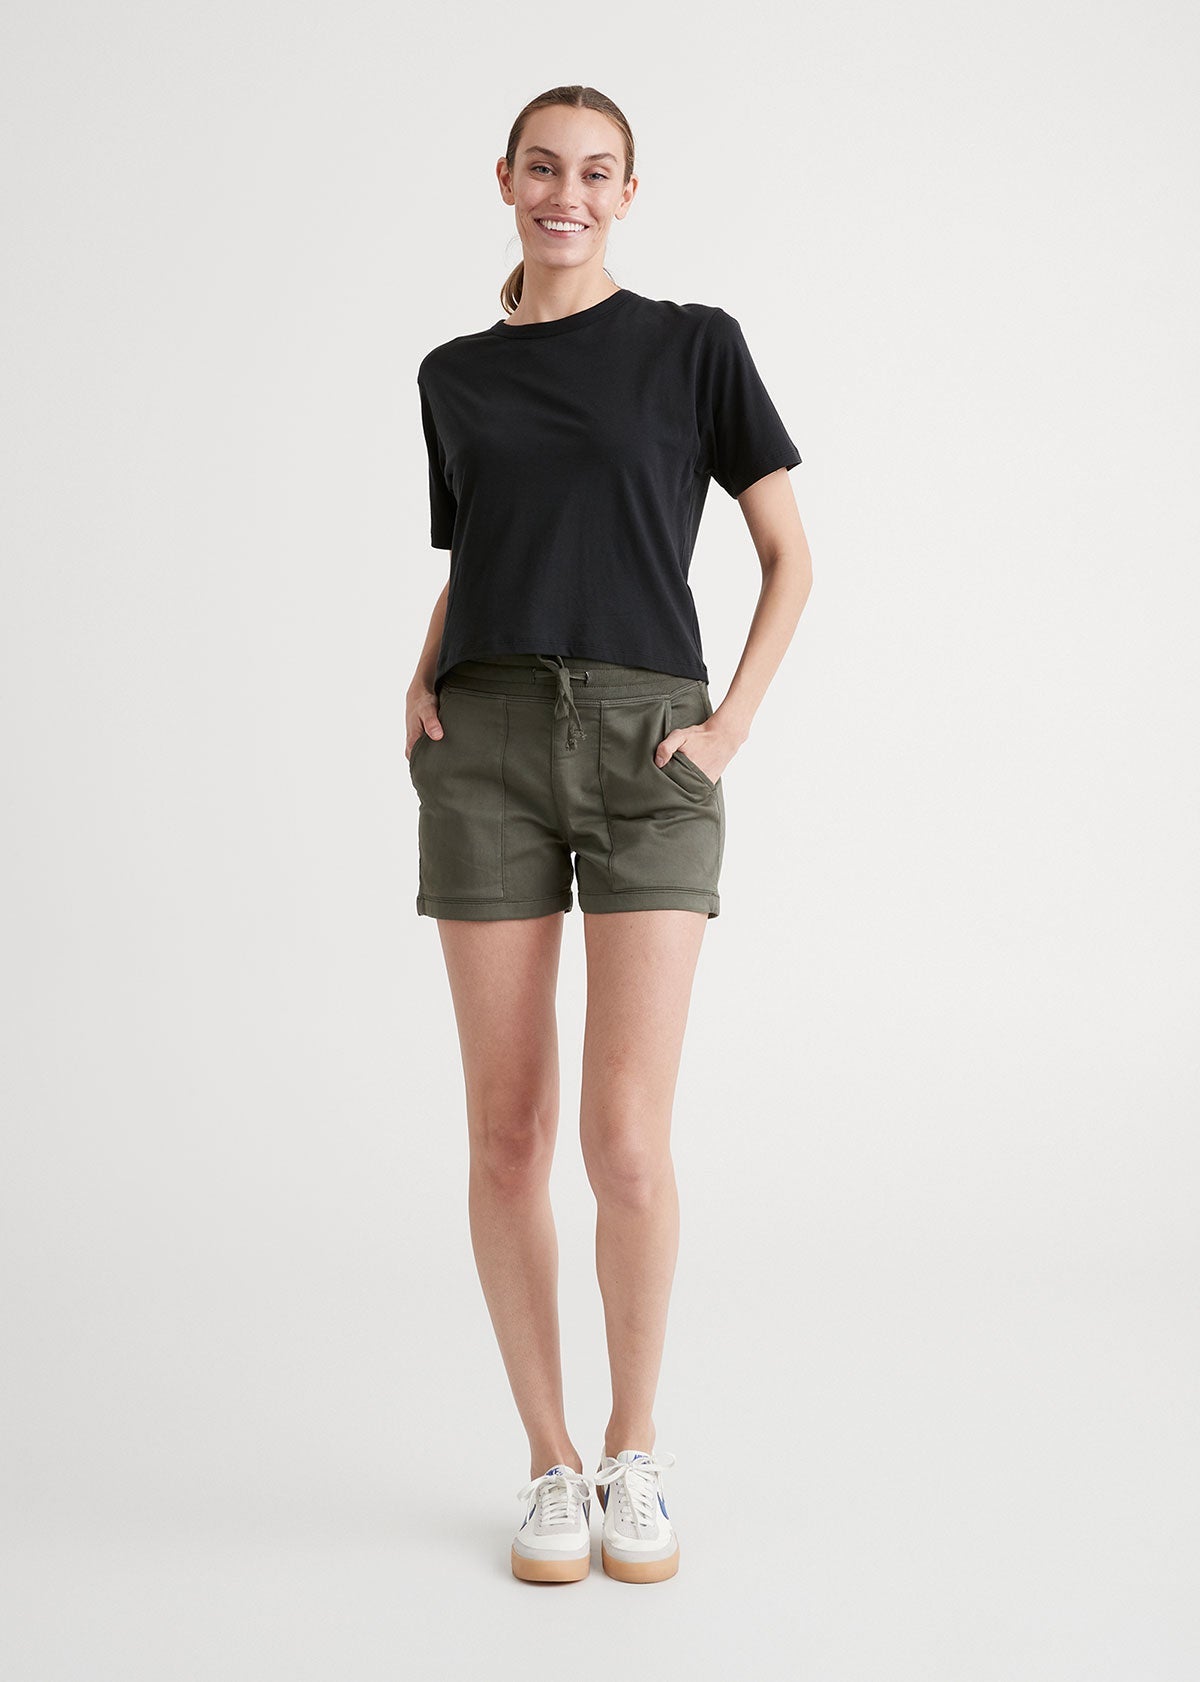 RYRJJ Womens Lightweight Shorts Casual Baggy Trendy Short Pants Elastic  Waist Drawstring Comfy Shorts(Green,L)